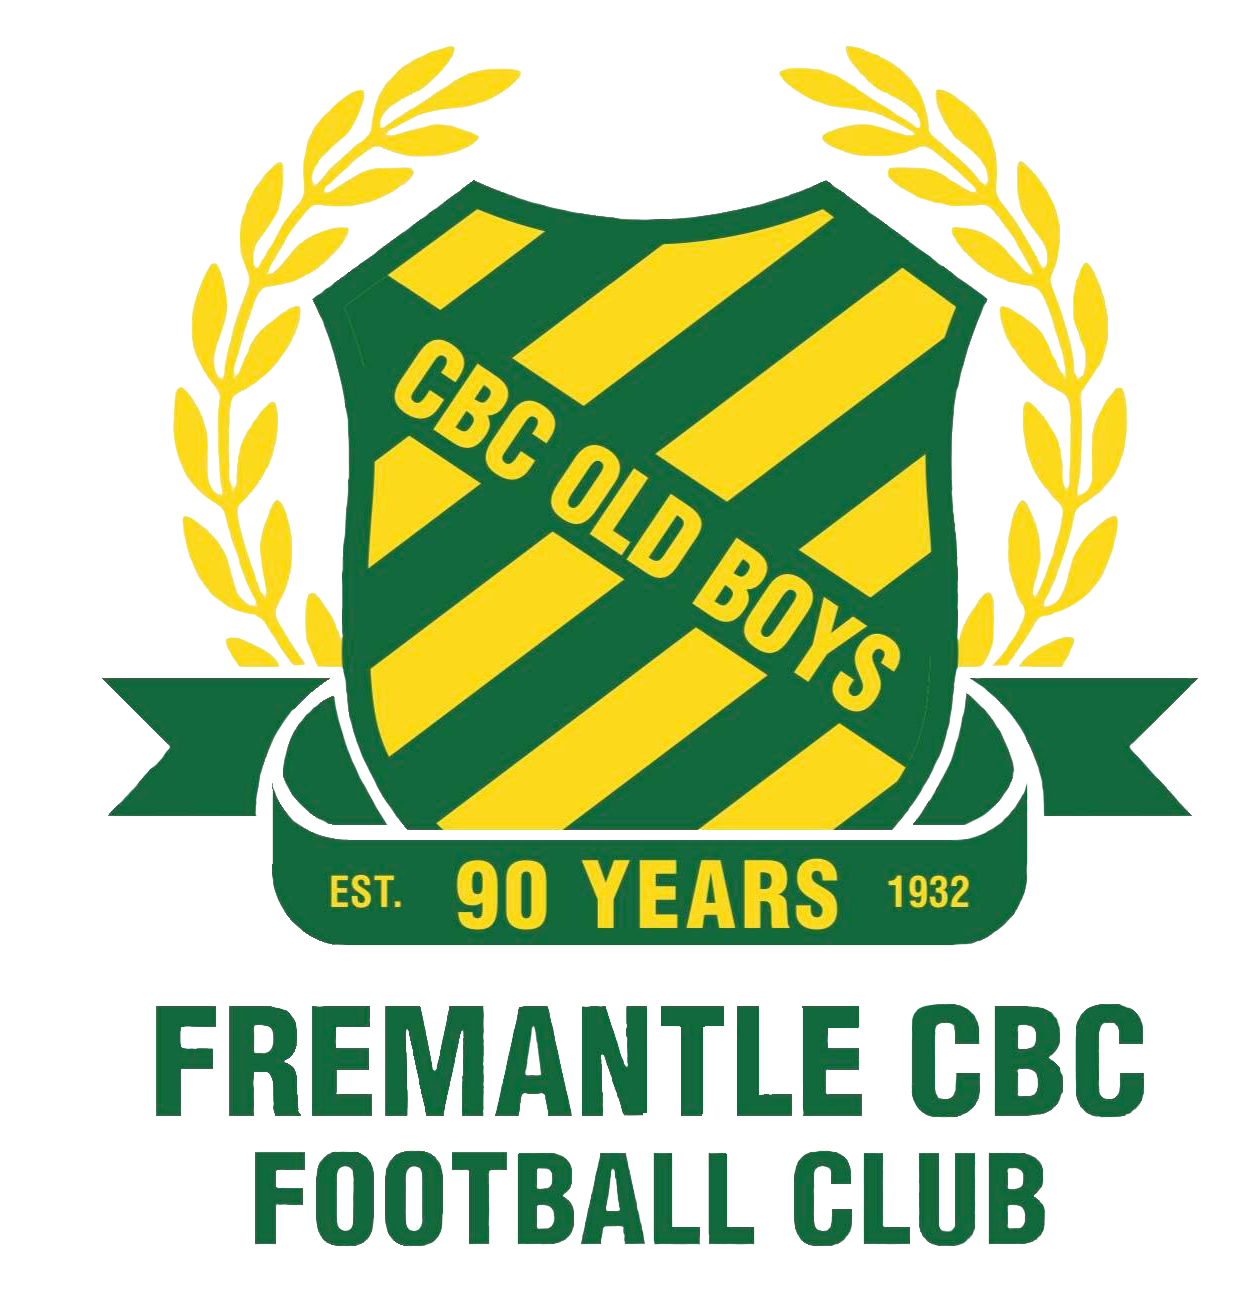 Fremantle CBC Football Club